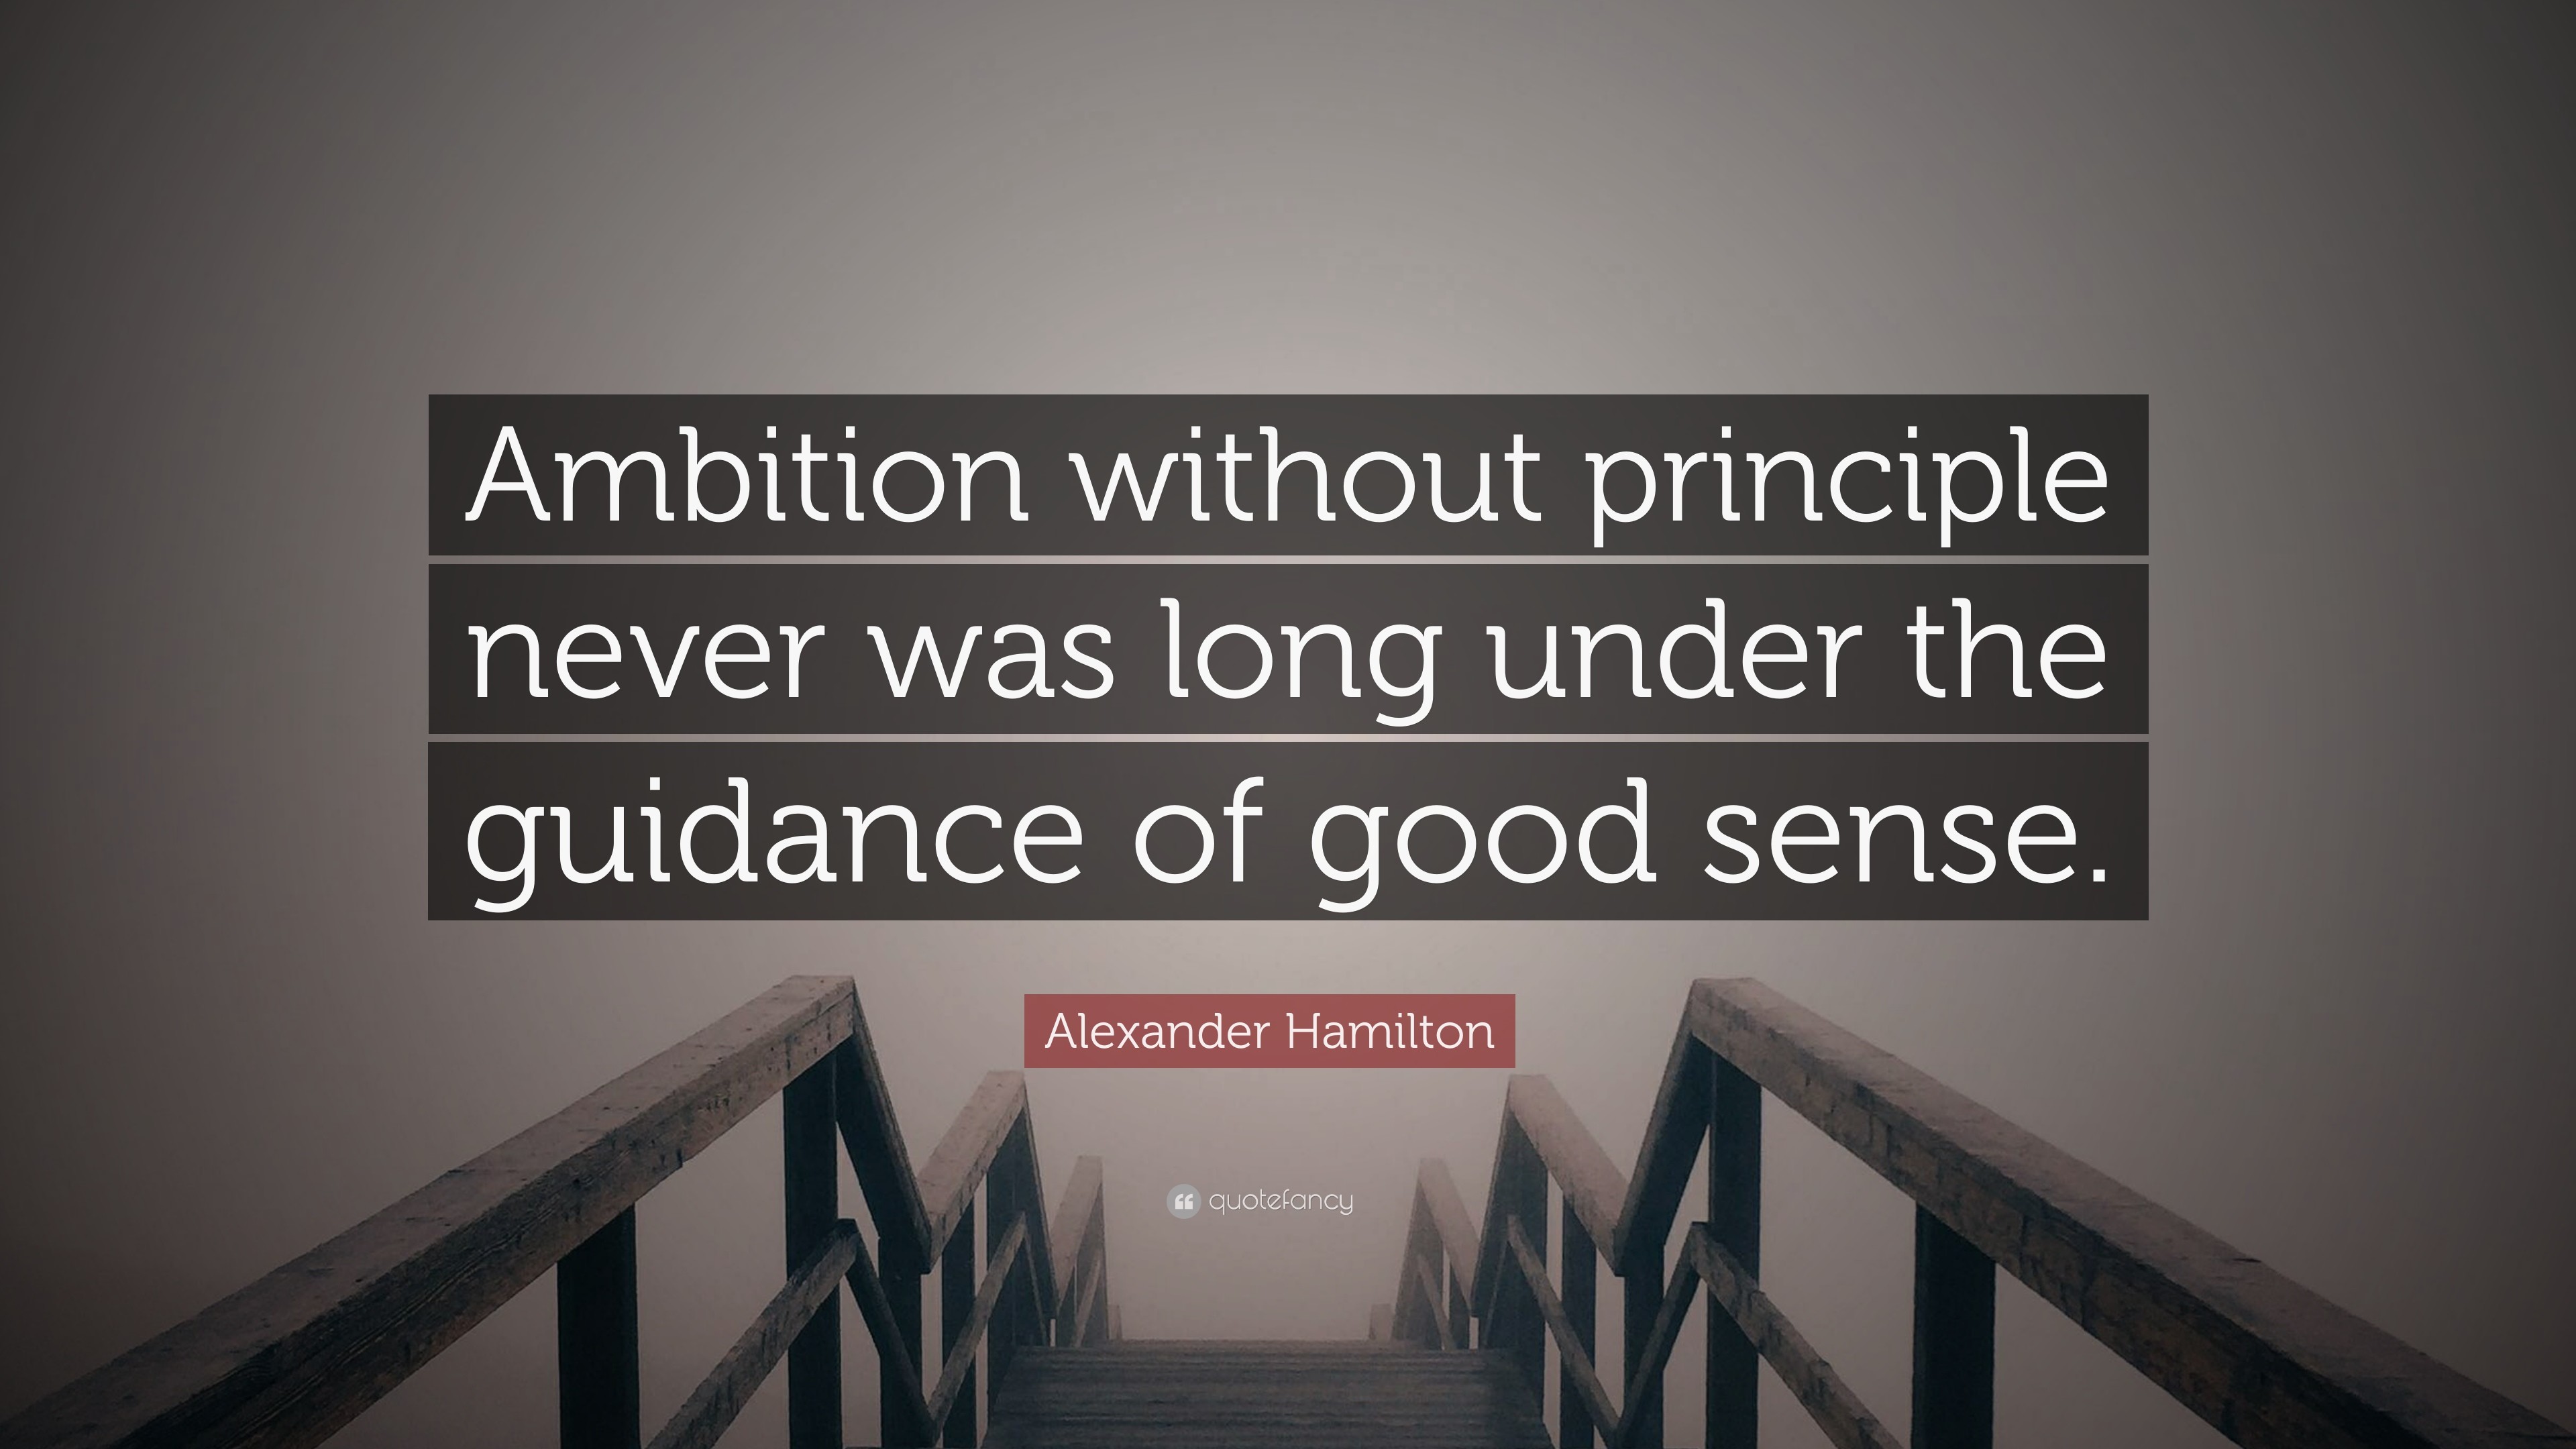 Alexander Hamilton Quote: "Ambition without principle never was long u...